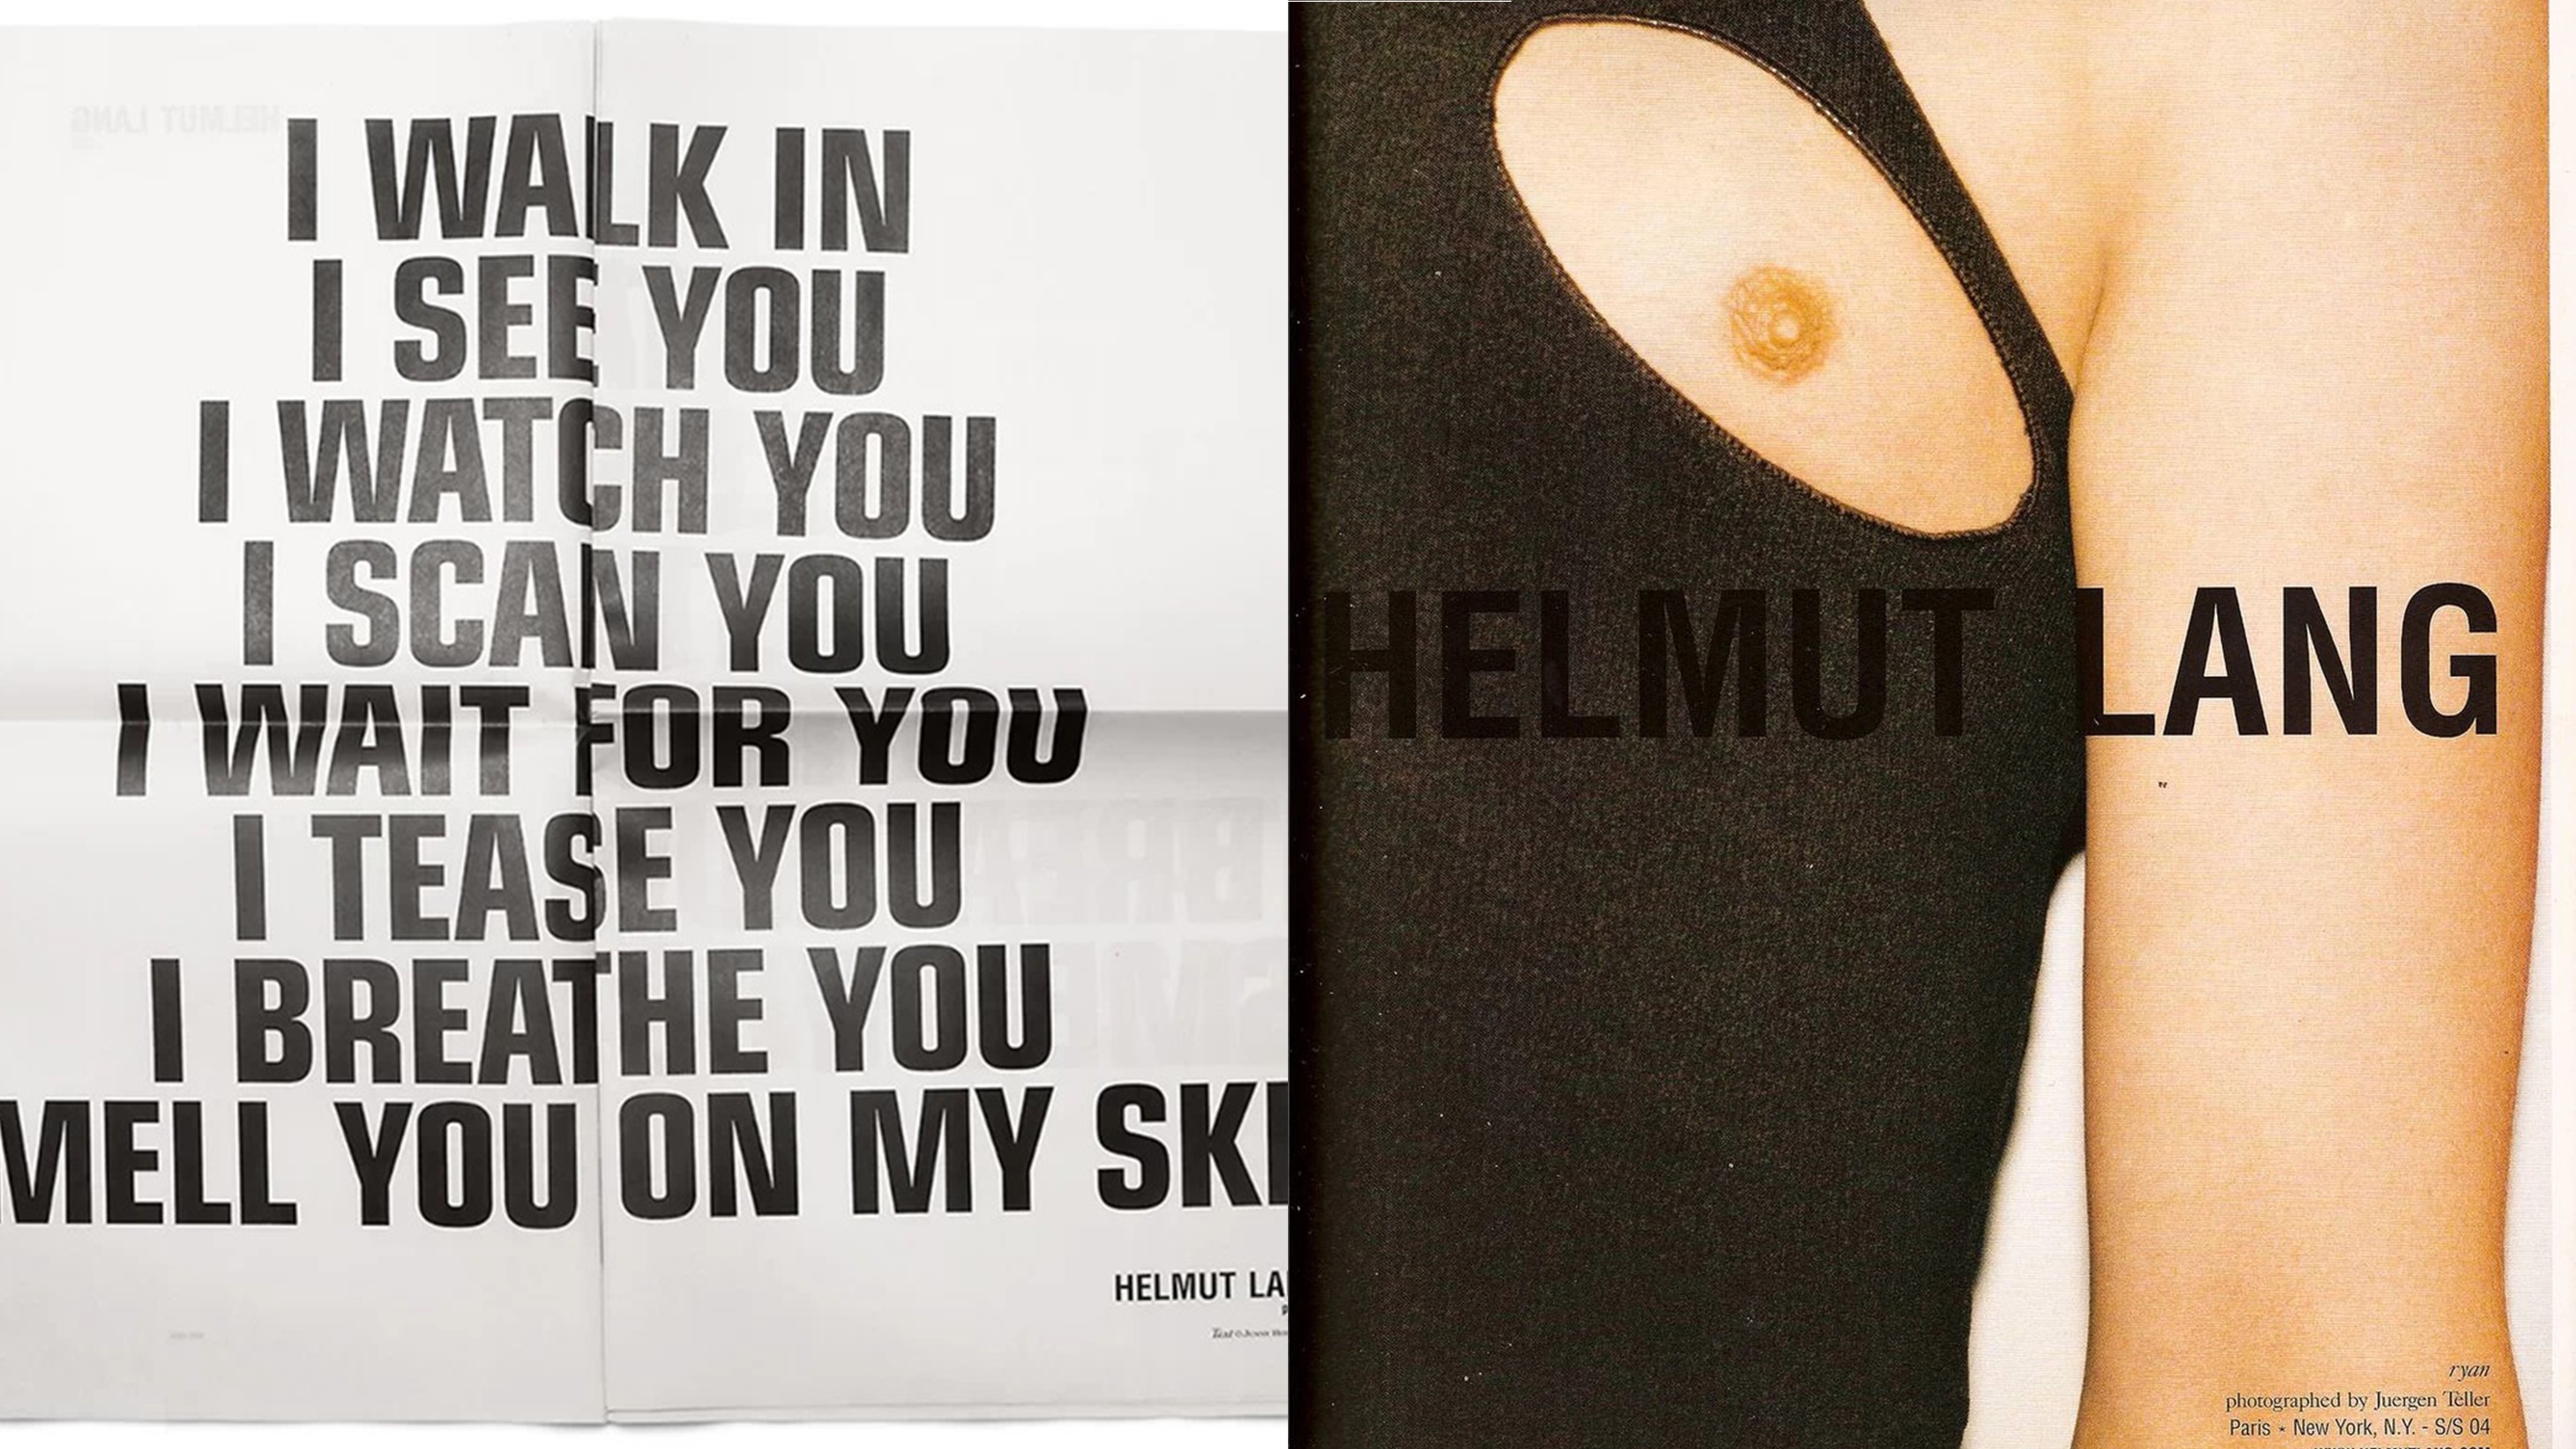 Helmut Lang - advertising campaign by Jürgen Teller